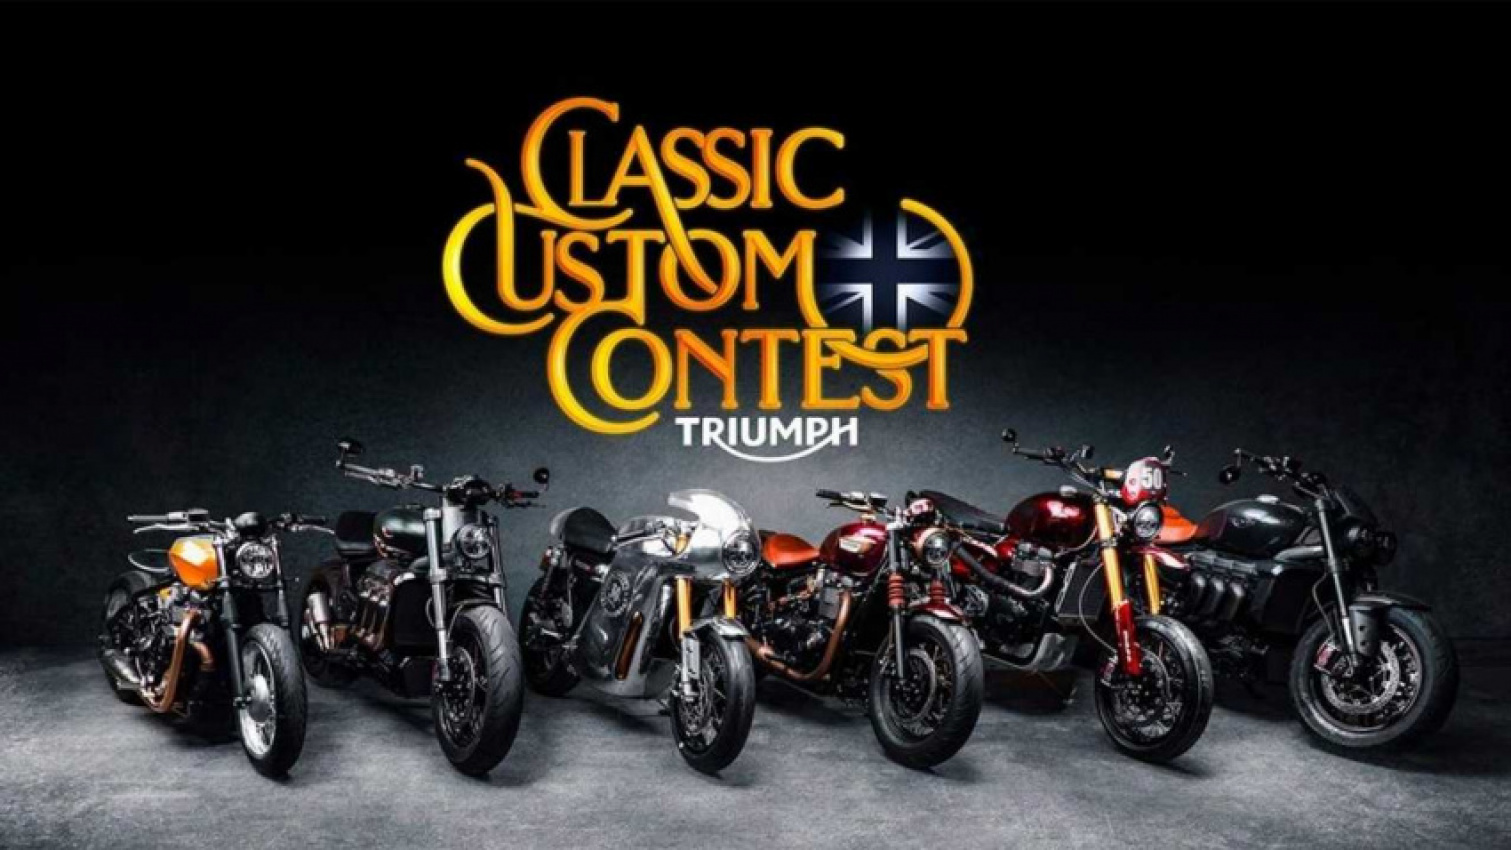 autos, cars, triumph, triumph france showcases range with classic custom contest